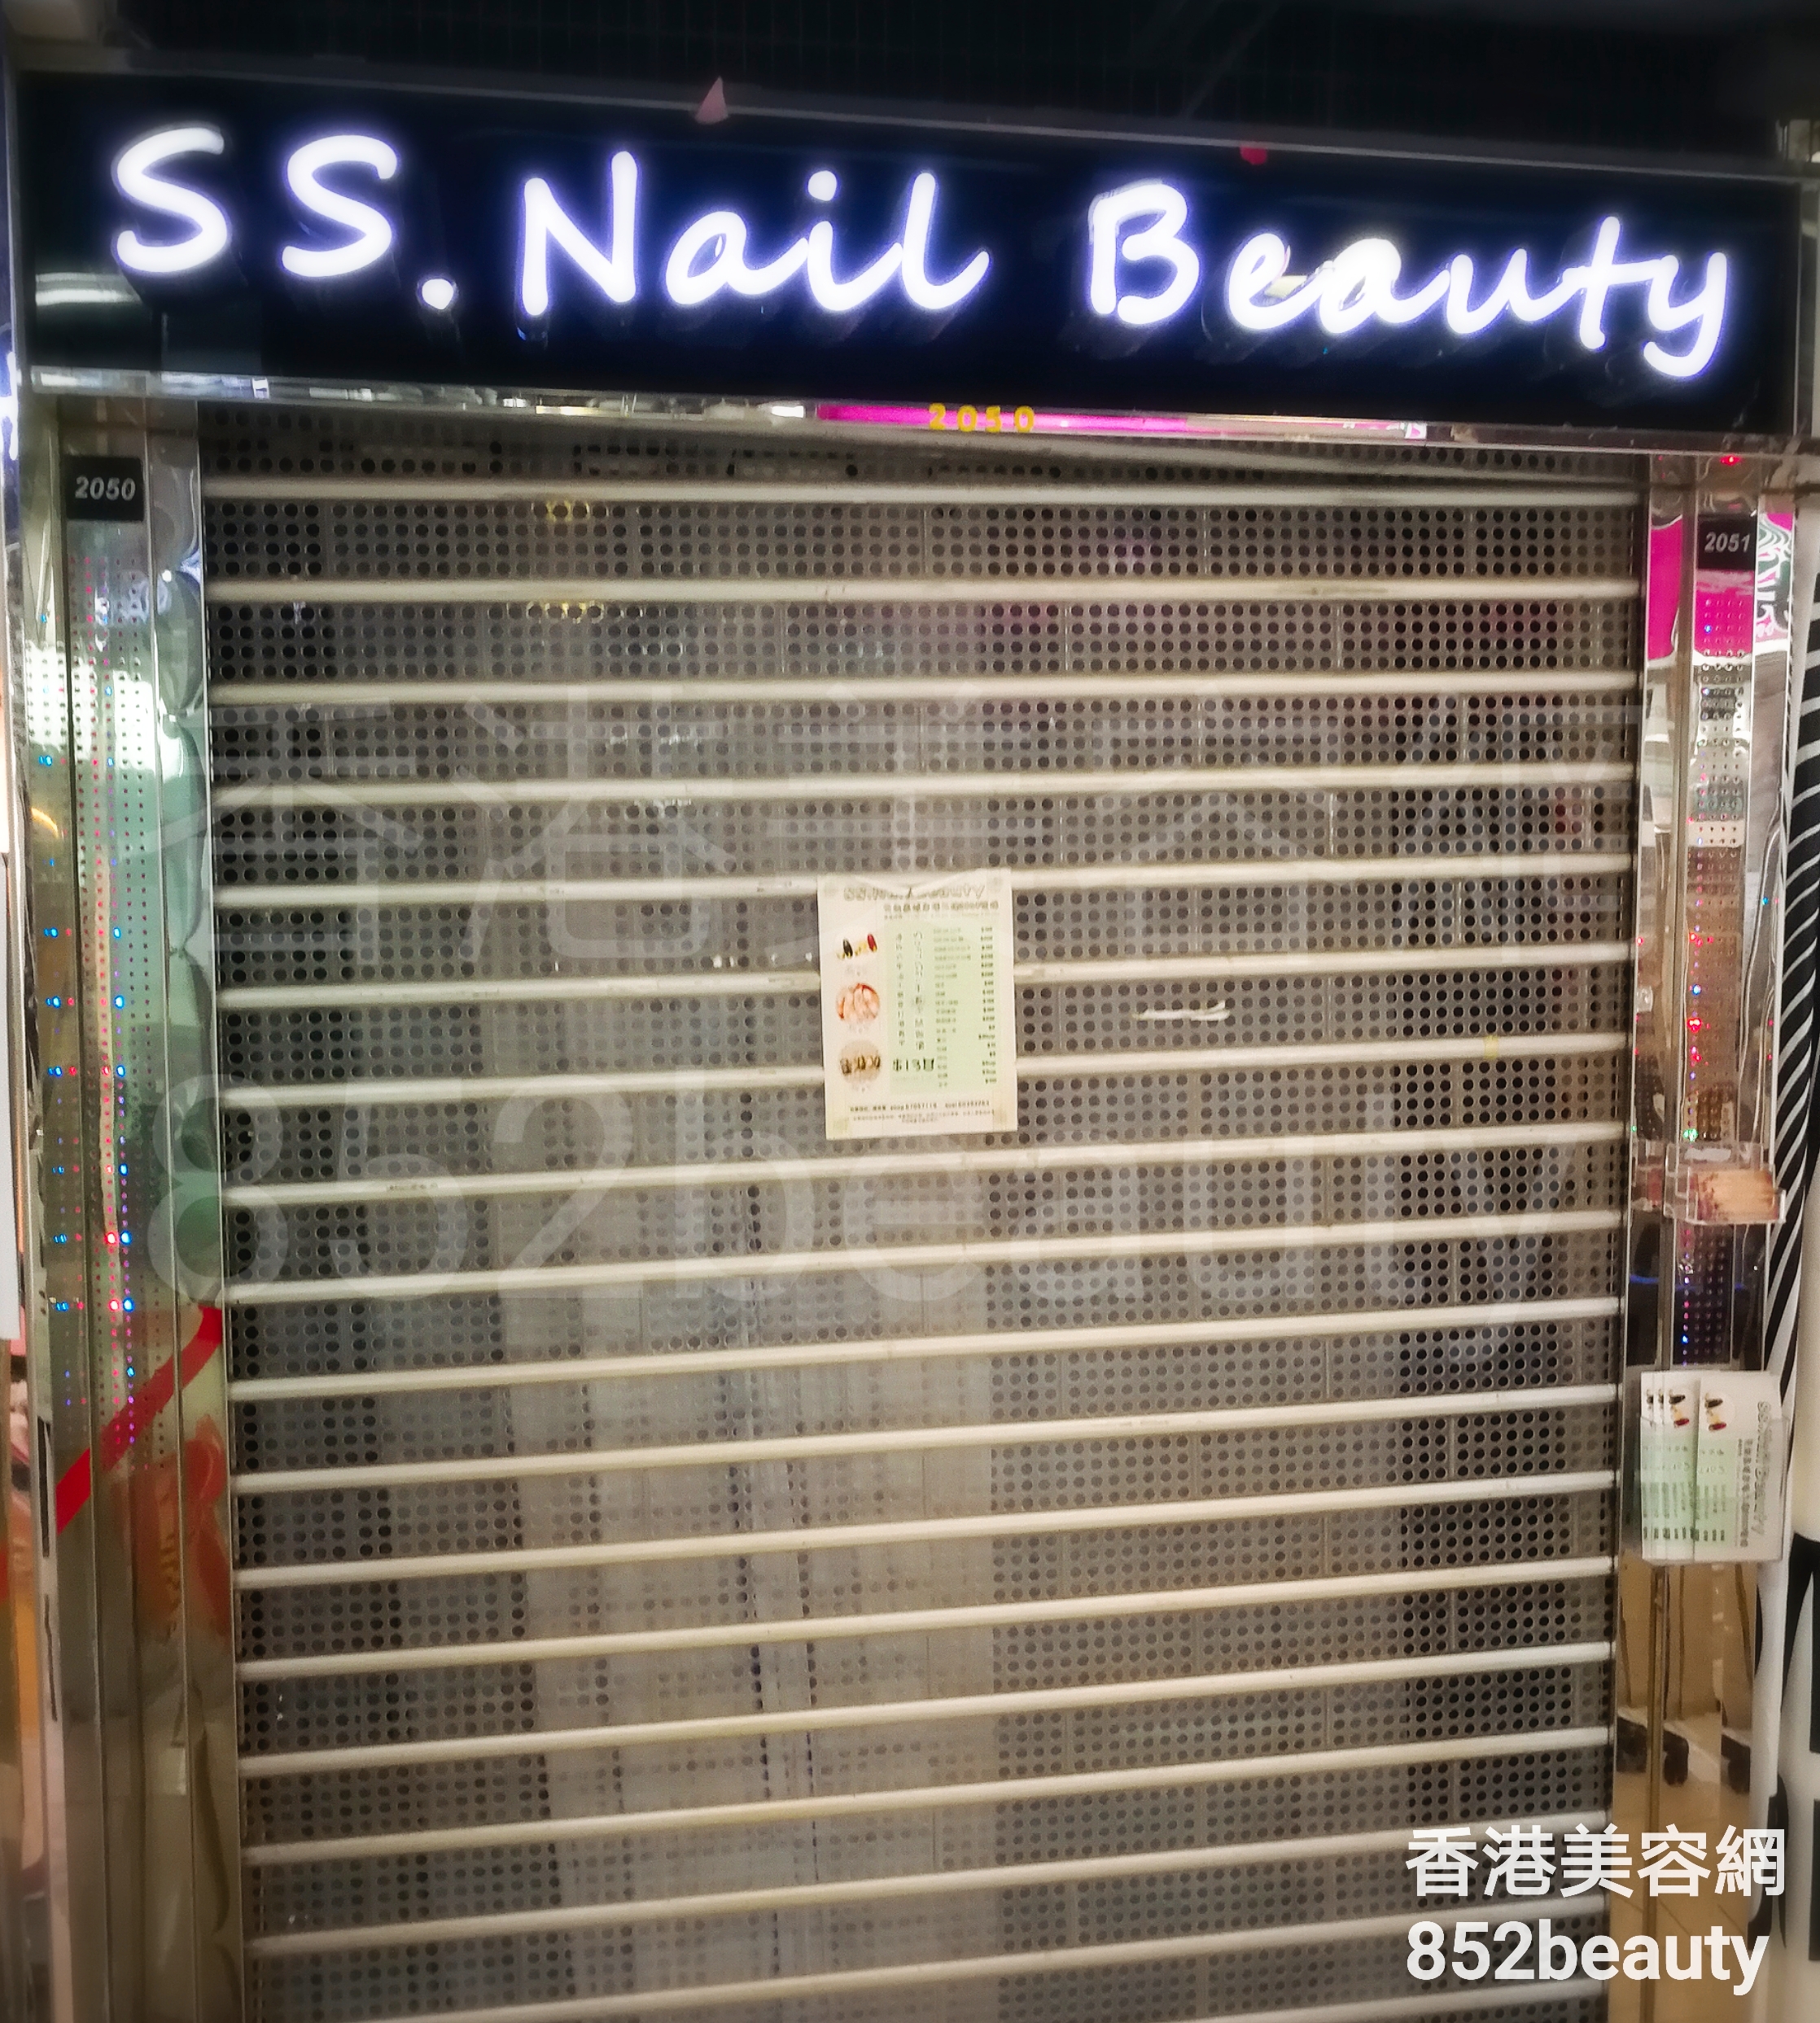 美容院 Beauty Salon: SS. Nail Beauty